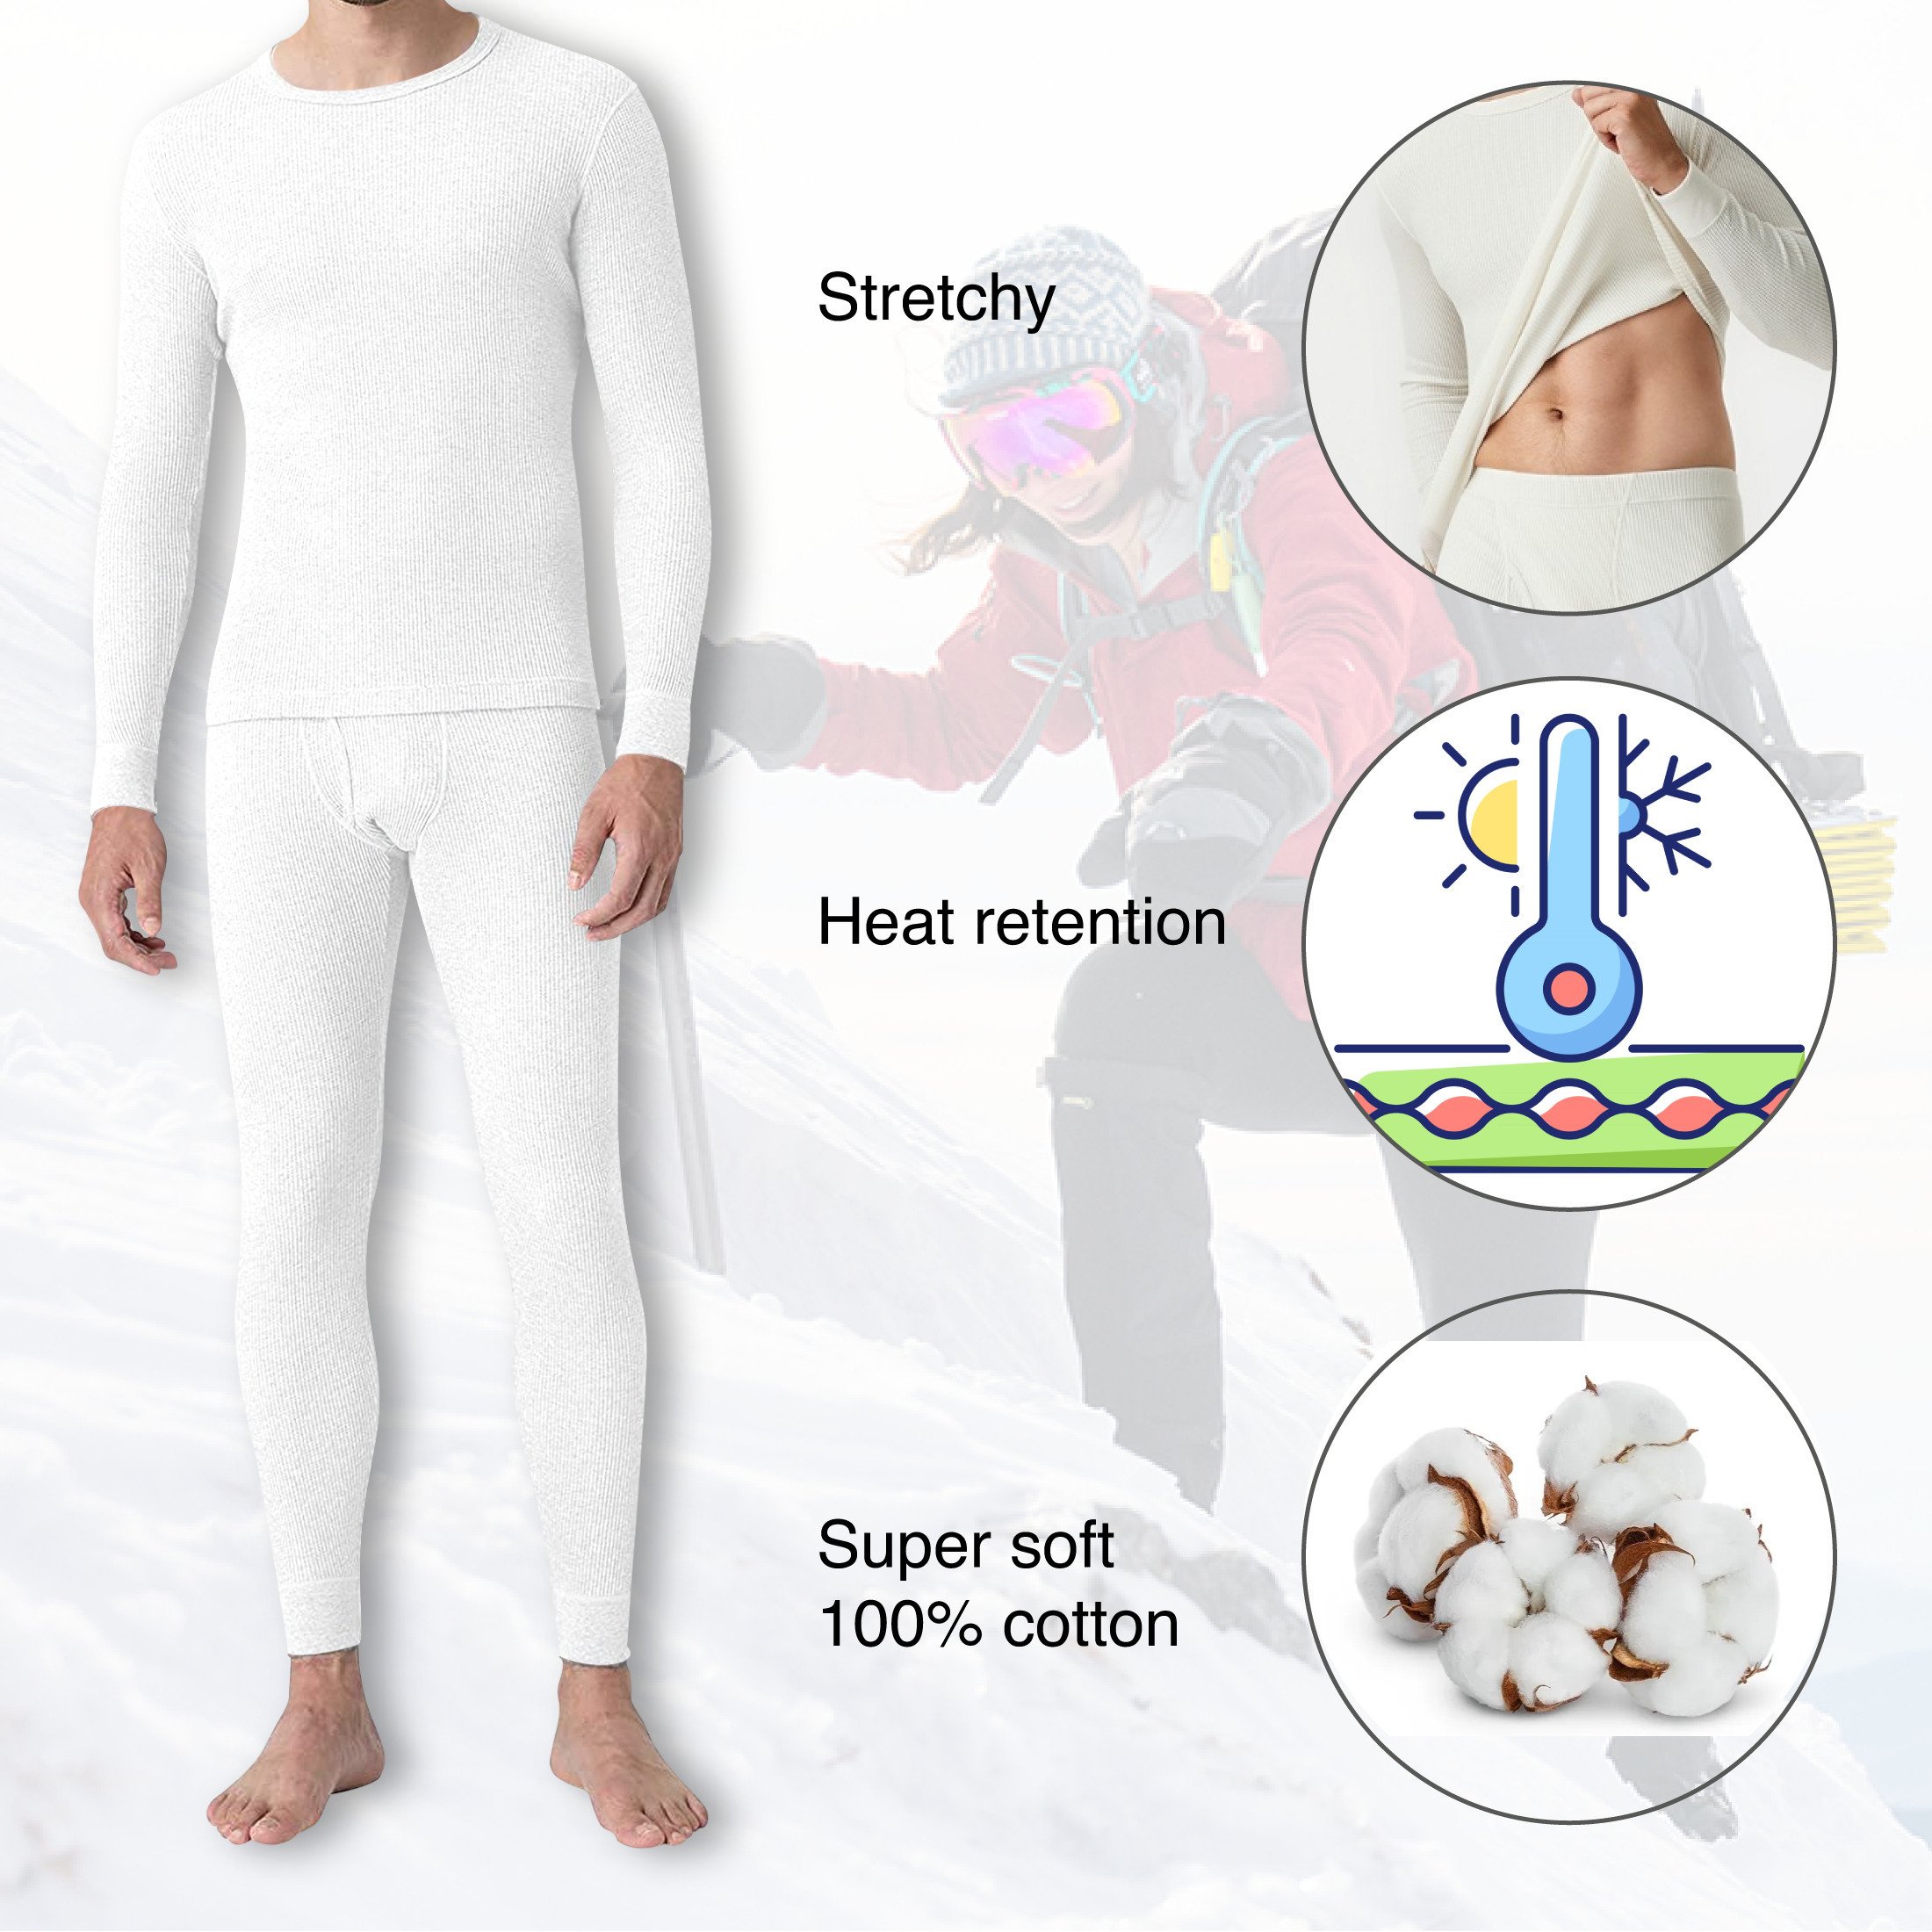 2-Sets: Men's Super Soft Cotton Waffle Knit Winter Thermal Underwear Set - White & White, X-Large